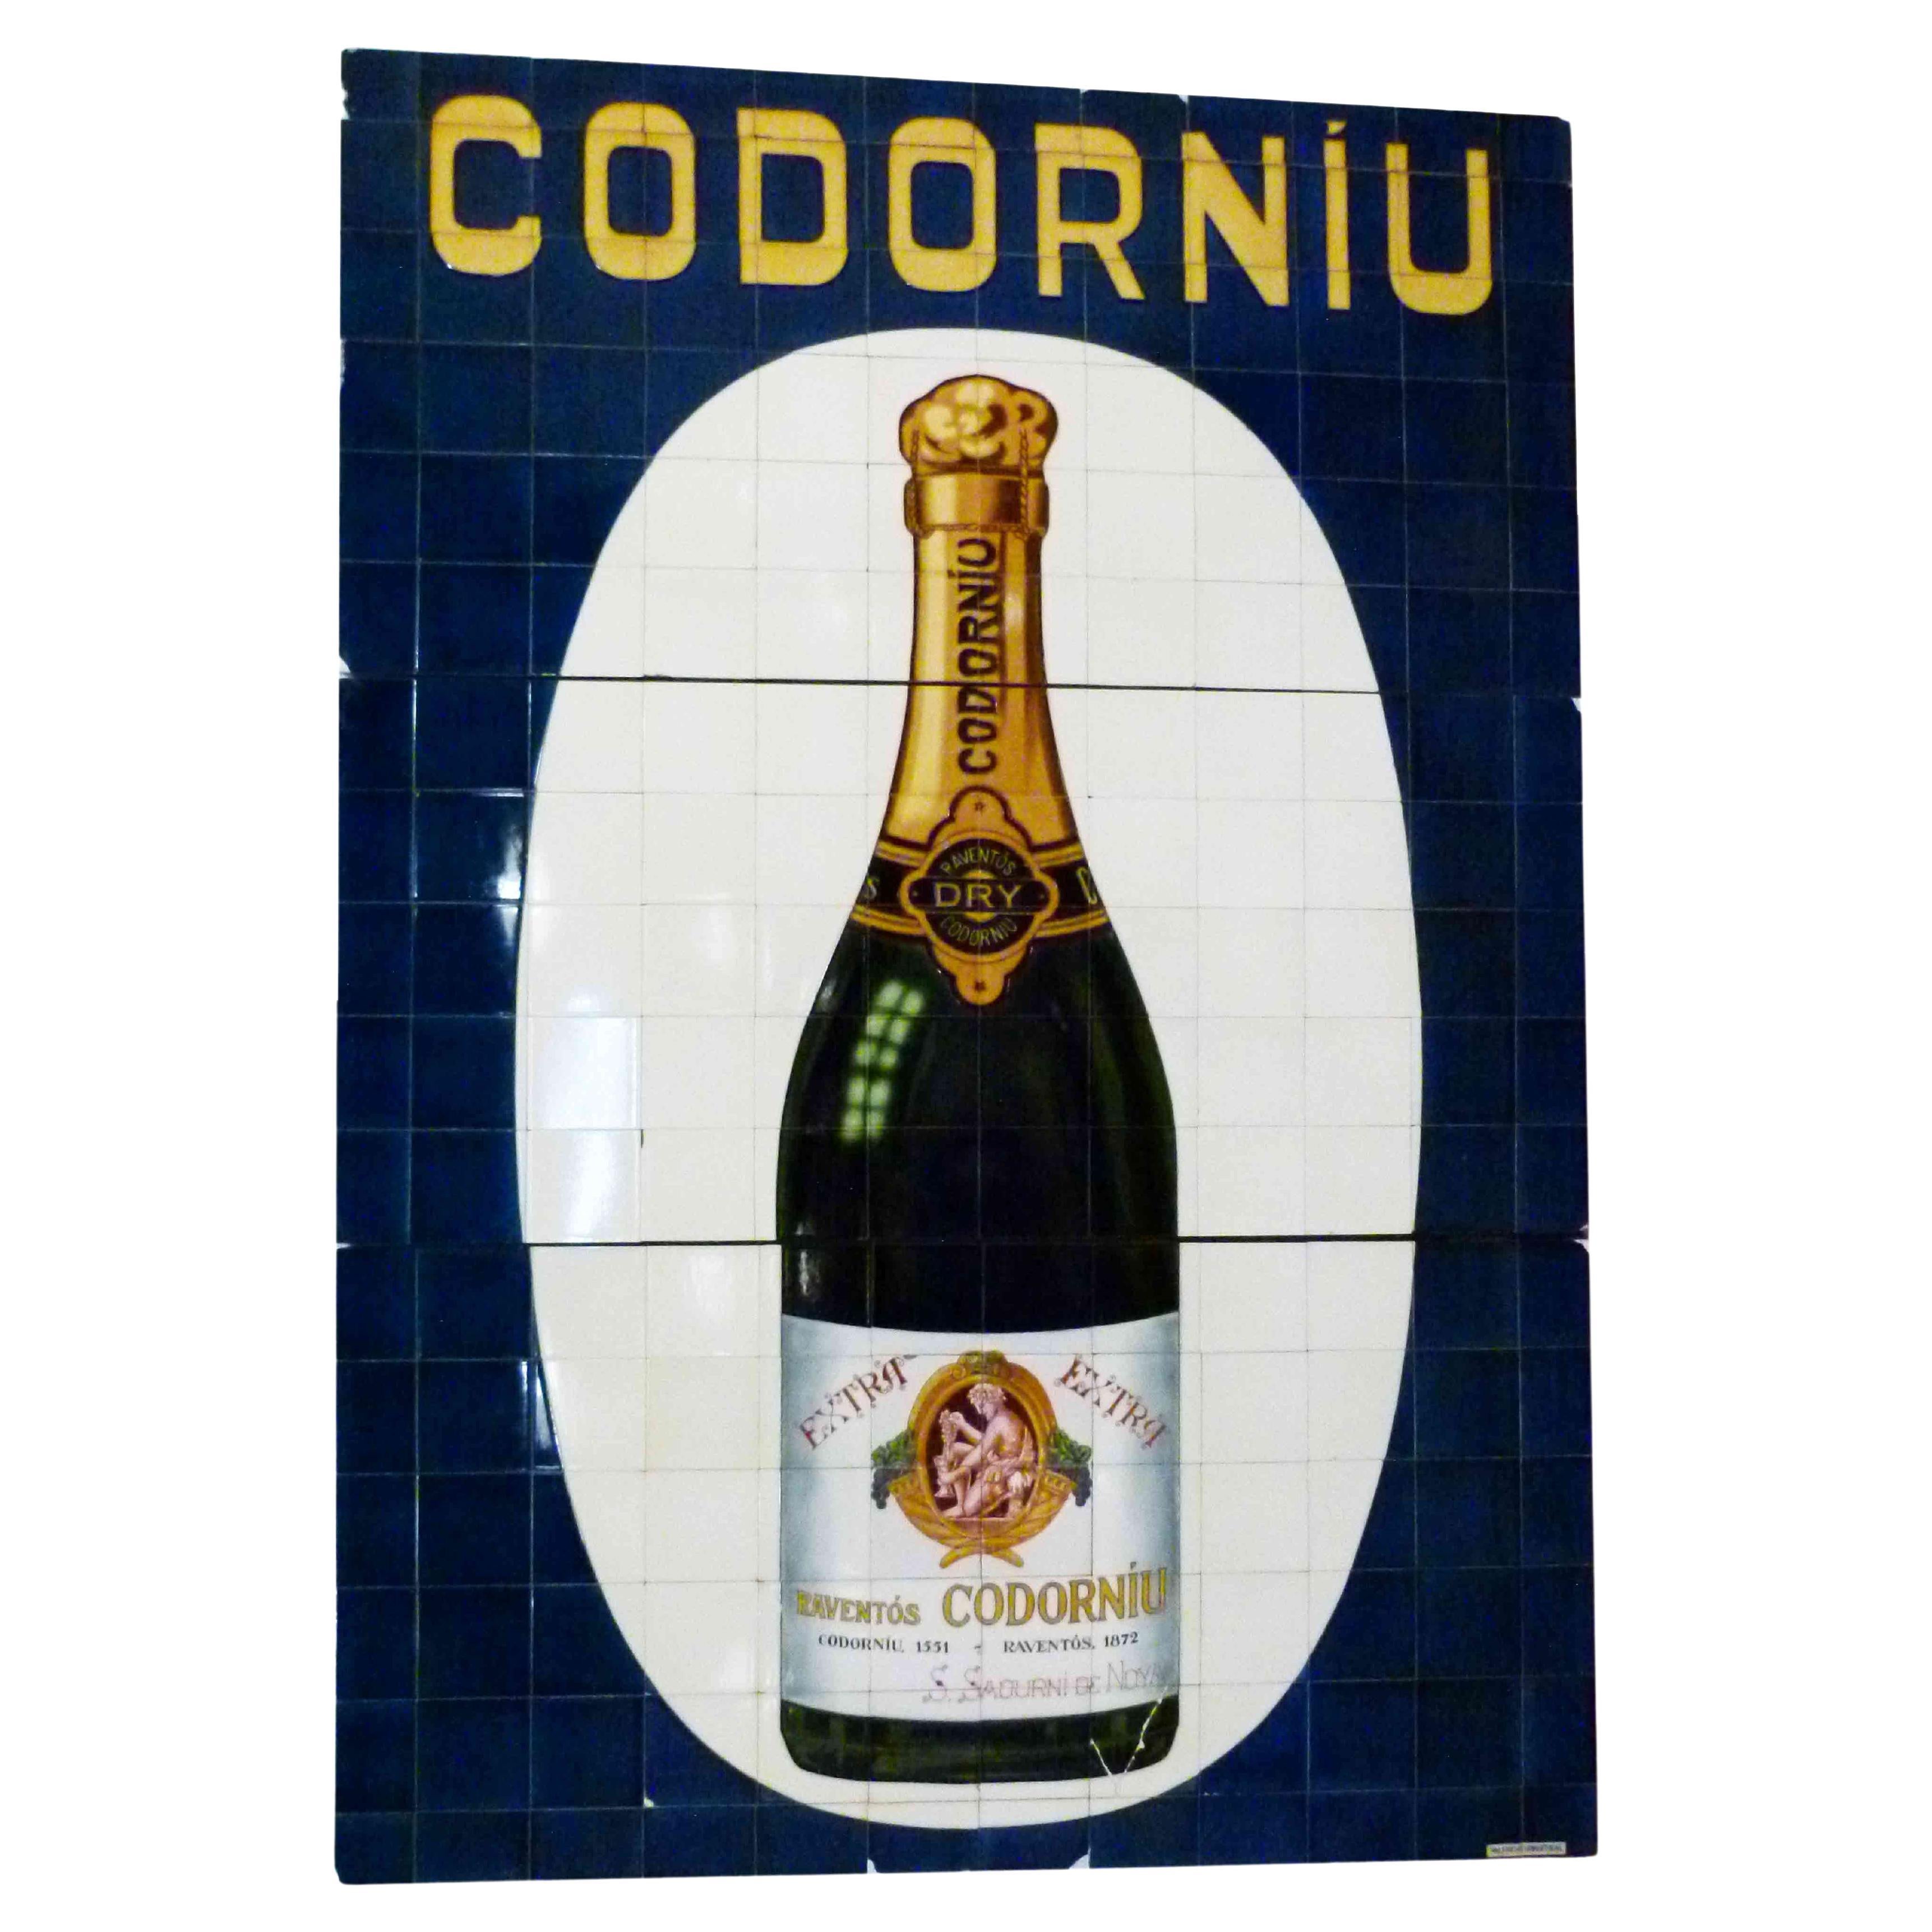 Art Nouveau Advertising Tile Poster from Codorniu's Cellar, Spain